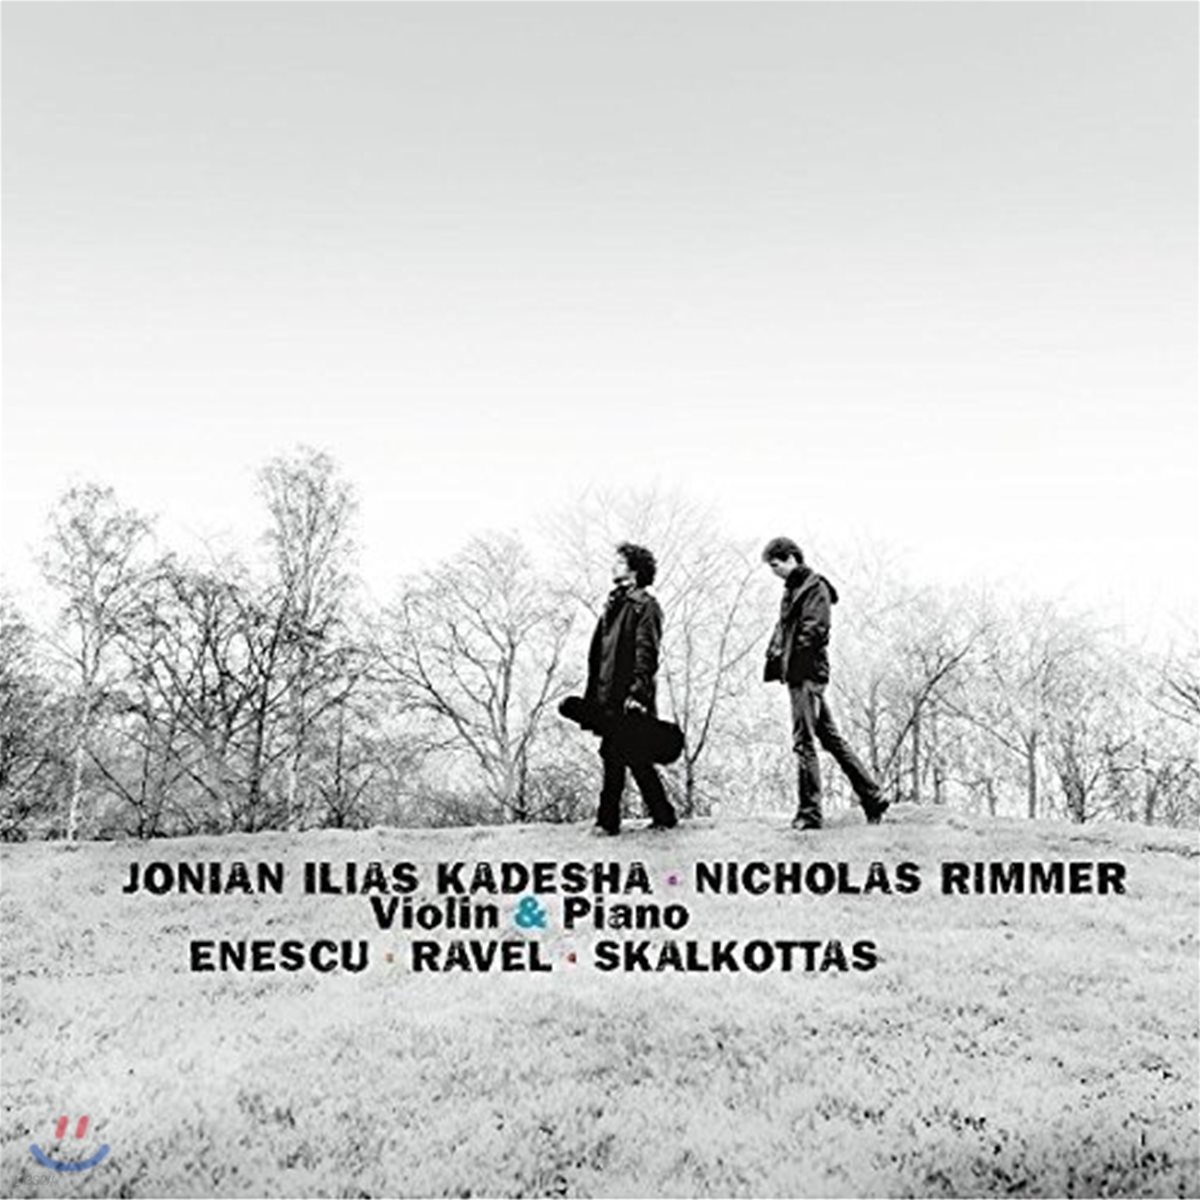 Jonian-Ilias Kadesha / Nicholas Rimmer 라벨 / 에네스쿠: 바이올린 소나타 - 요니안-일리야 카데샤, 니콜라스 림머 (Enescu / Ravel / Skalkottas: Works for Violin &amp; Piano)